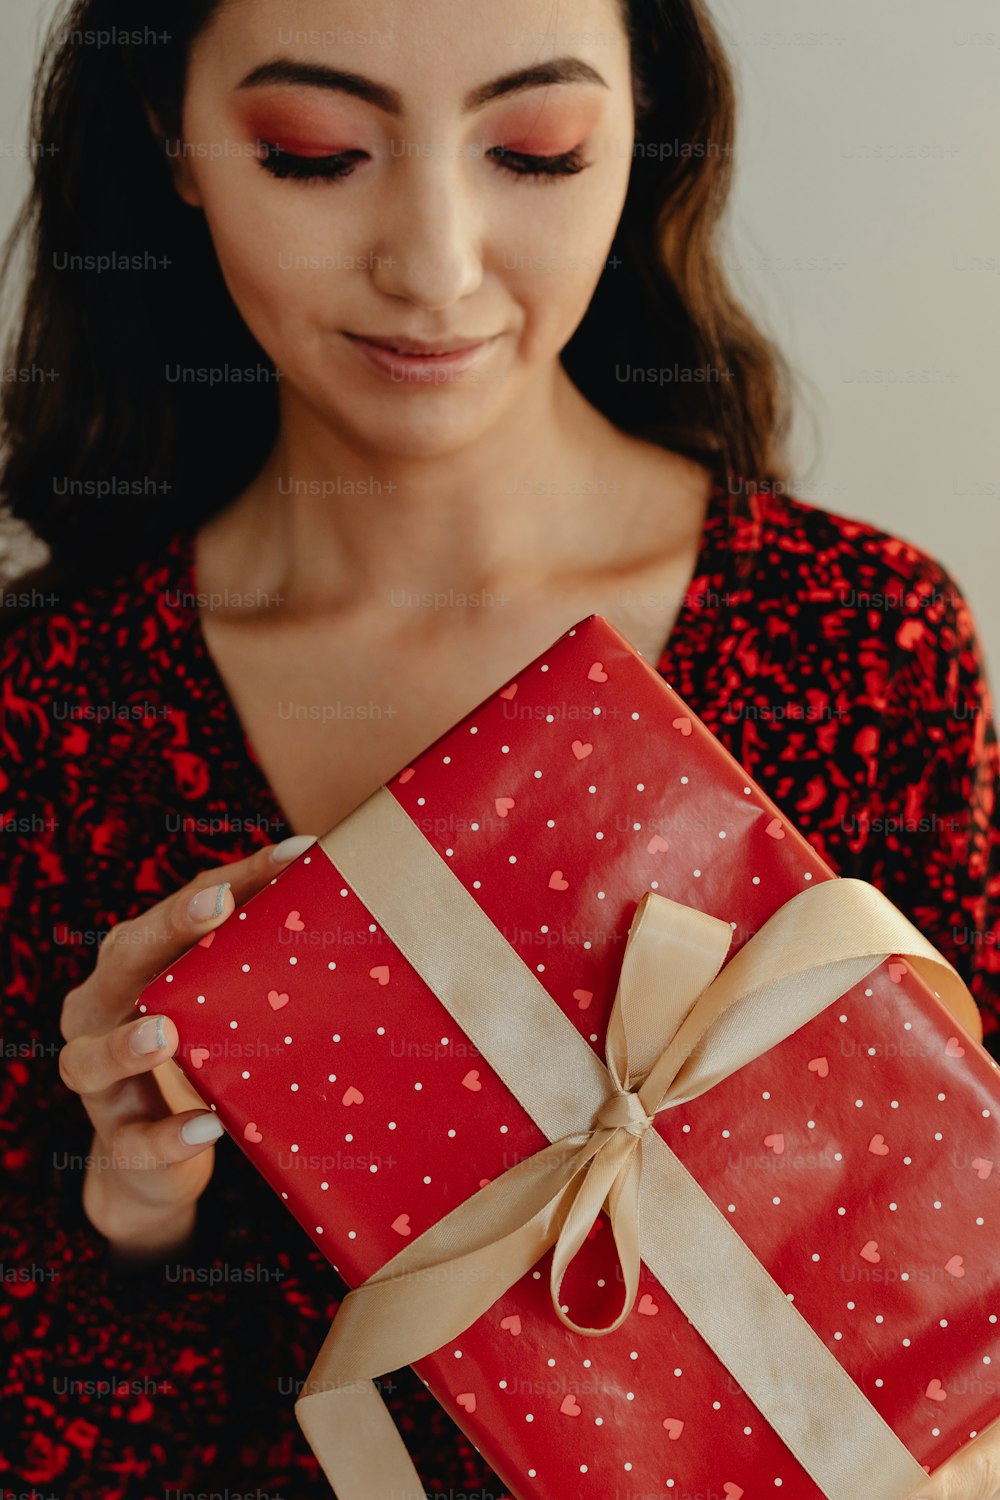 Una donna che tiene una scatola regalo rossa con un nastro marrone